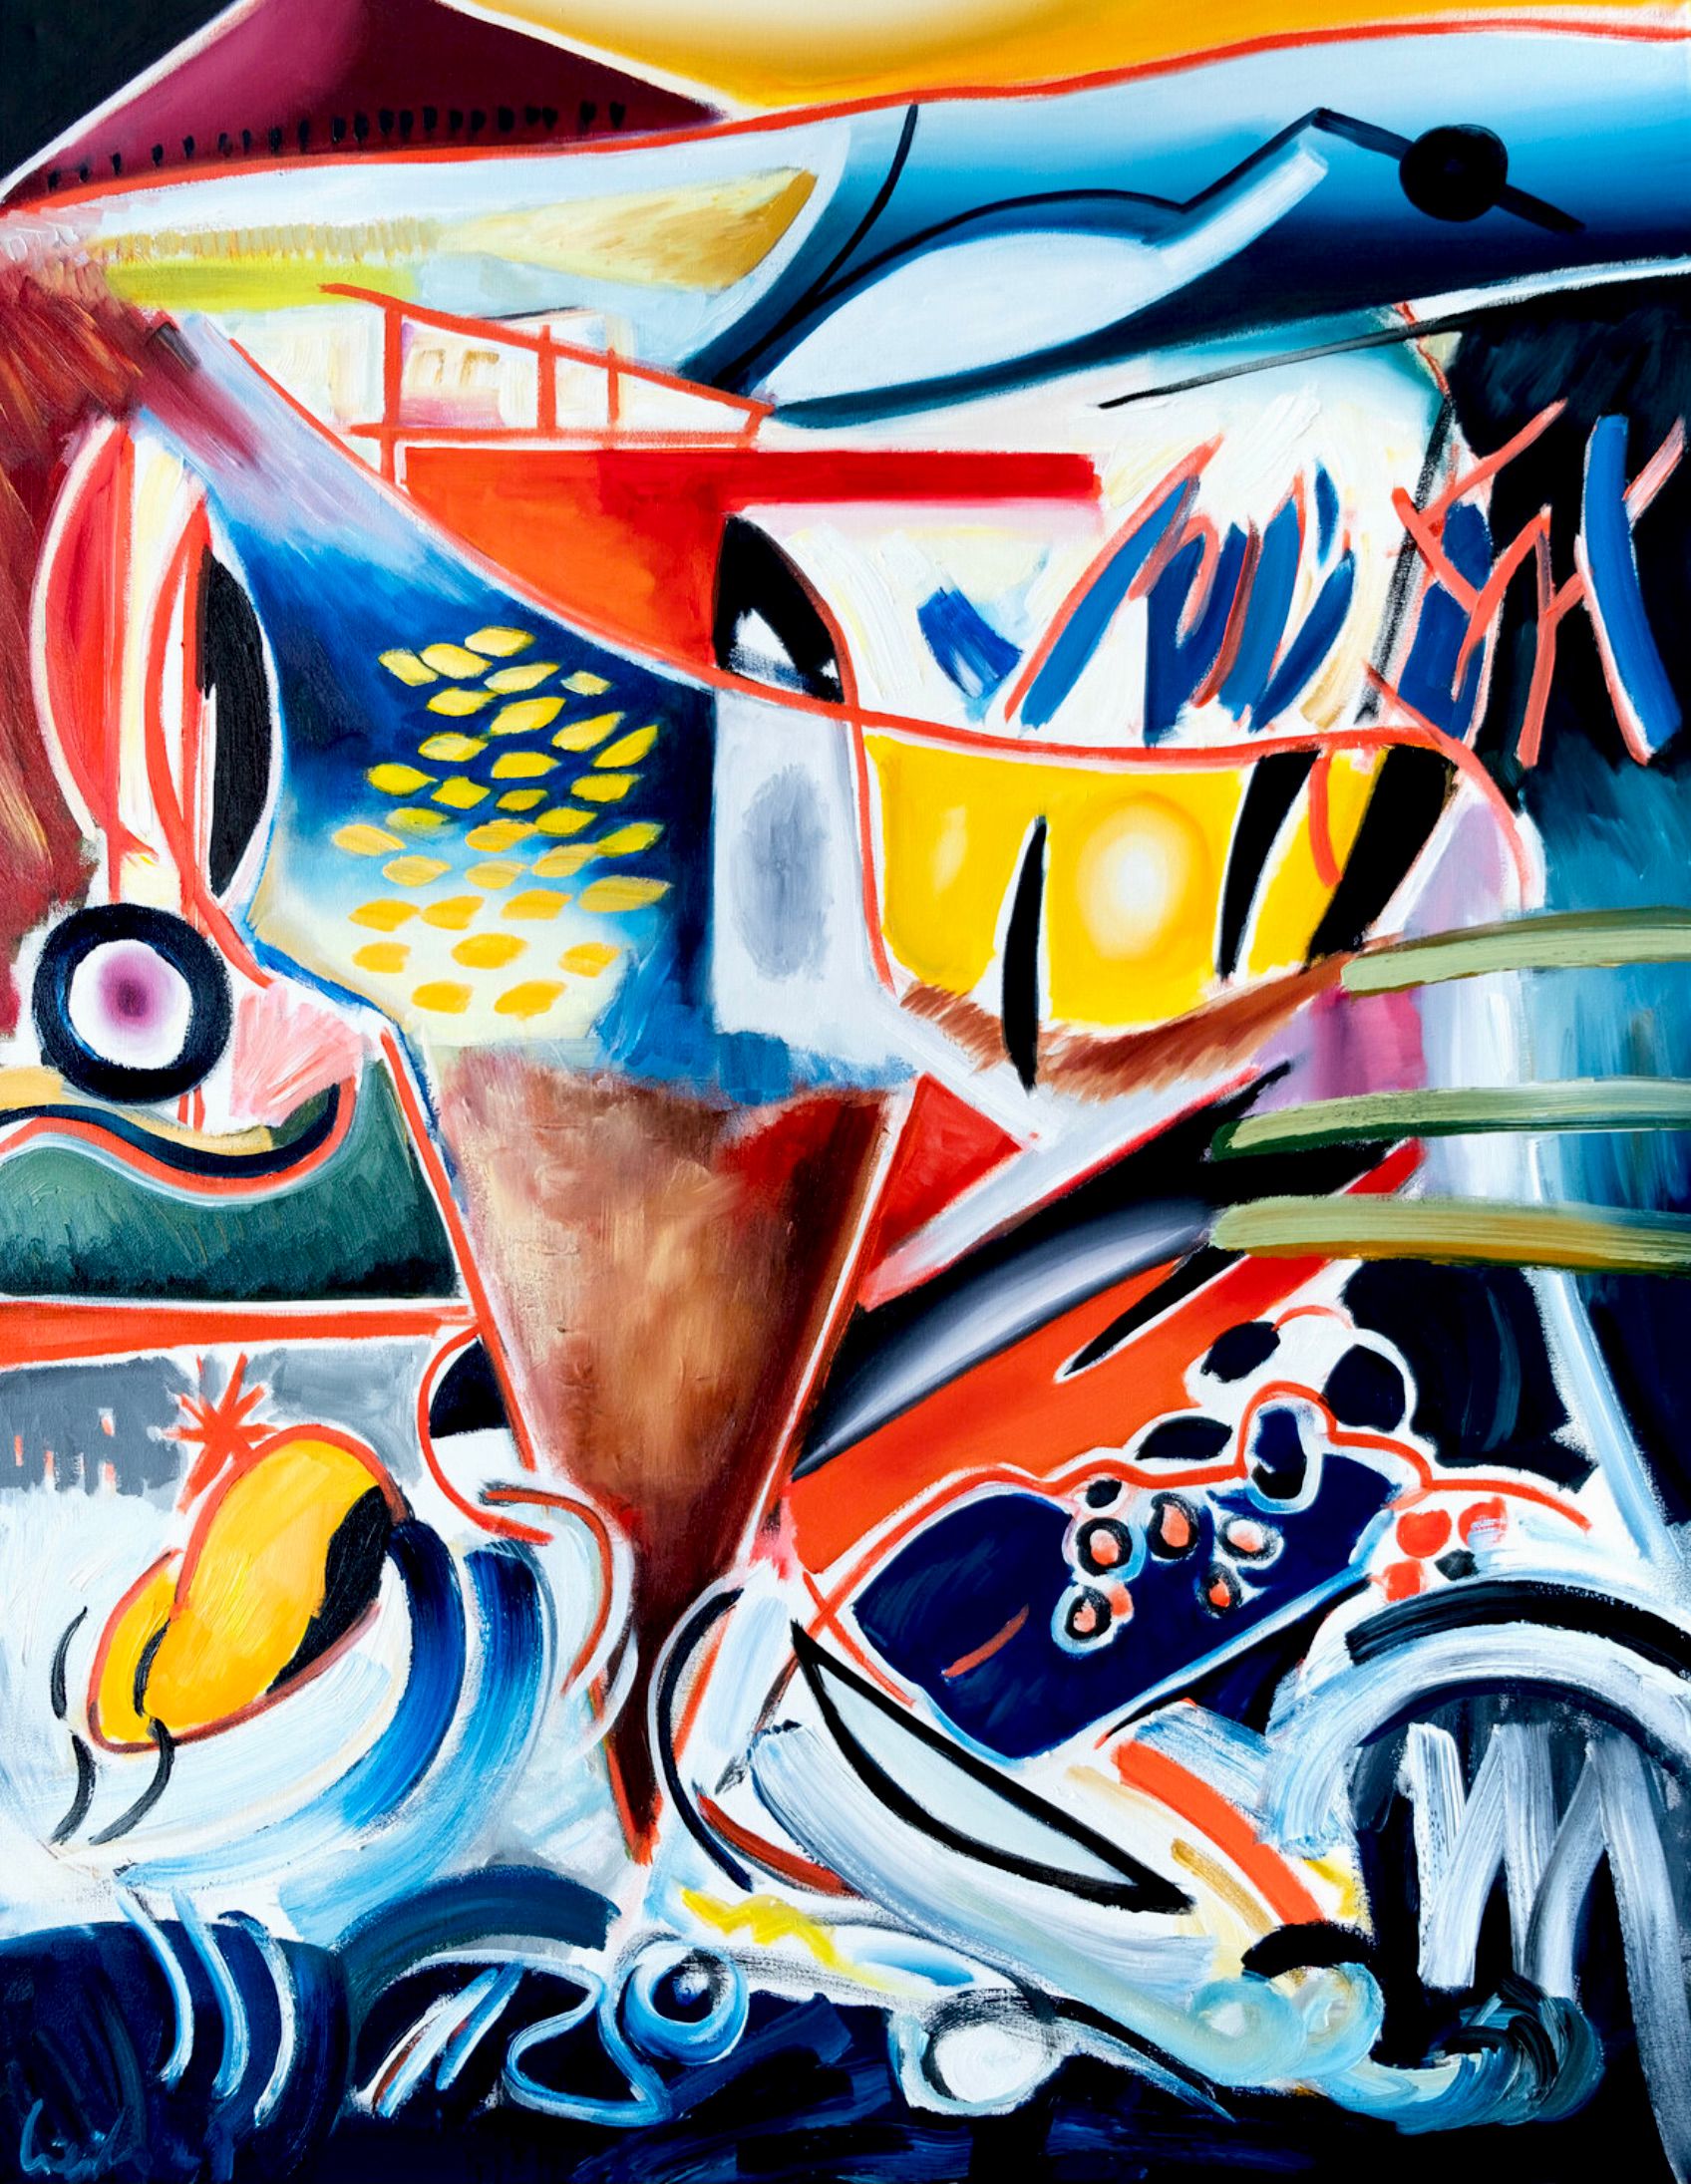 MECESLA Maciej Cieśla, "Punter Ala Italy in abstract forms", 画布上的抽象彩色绘画